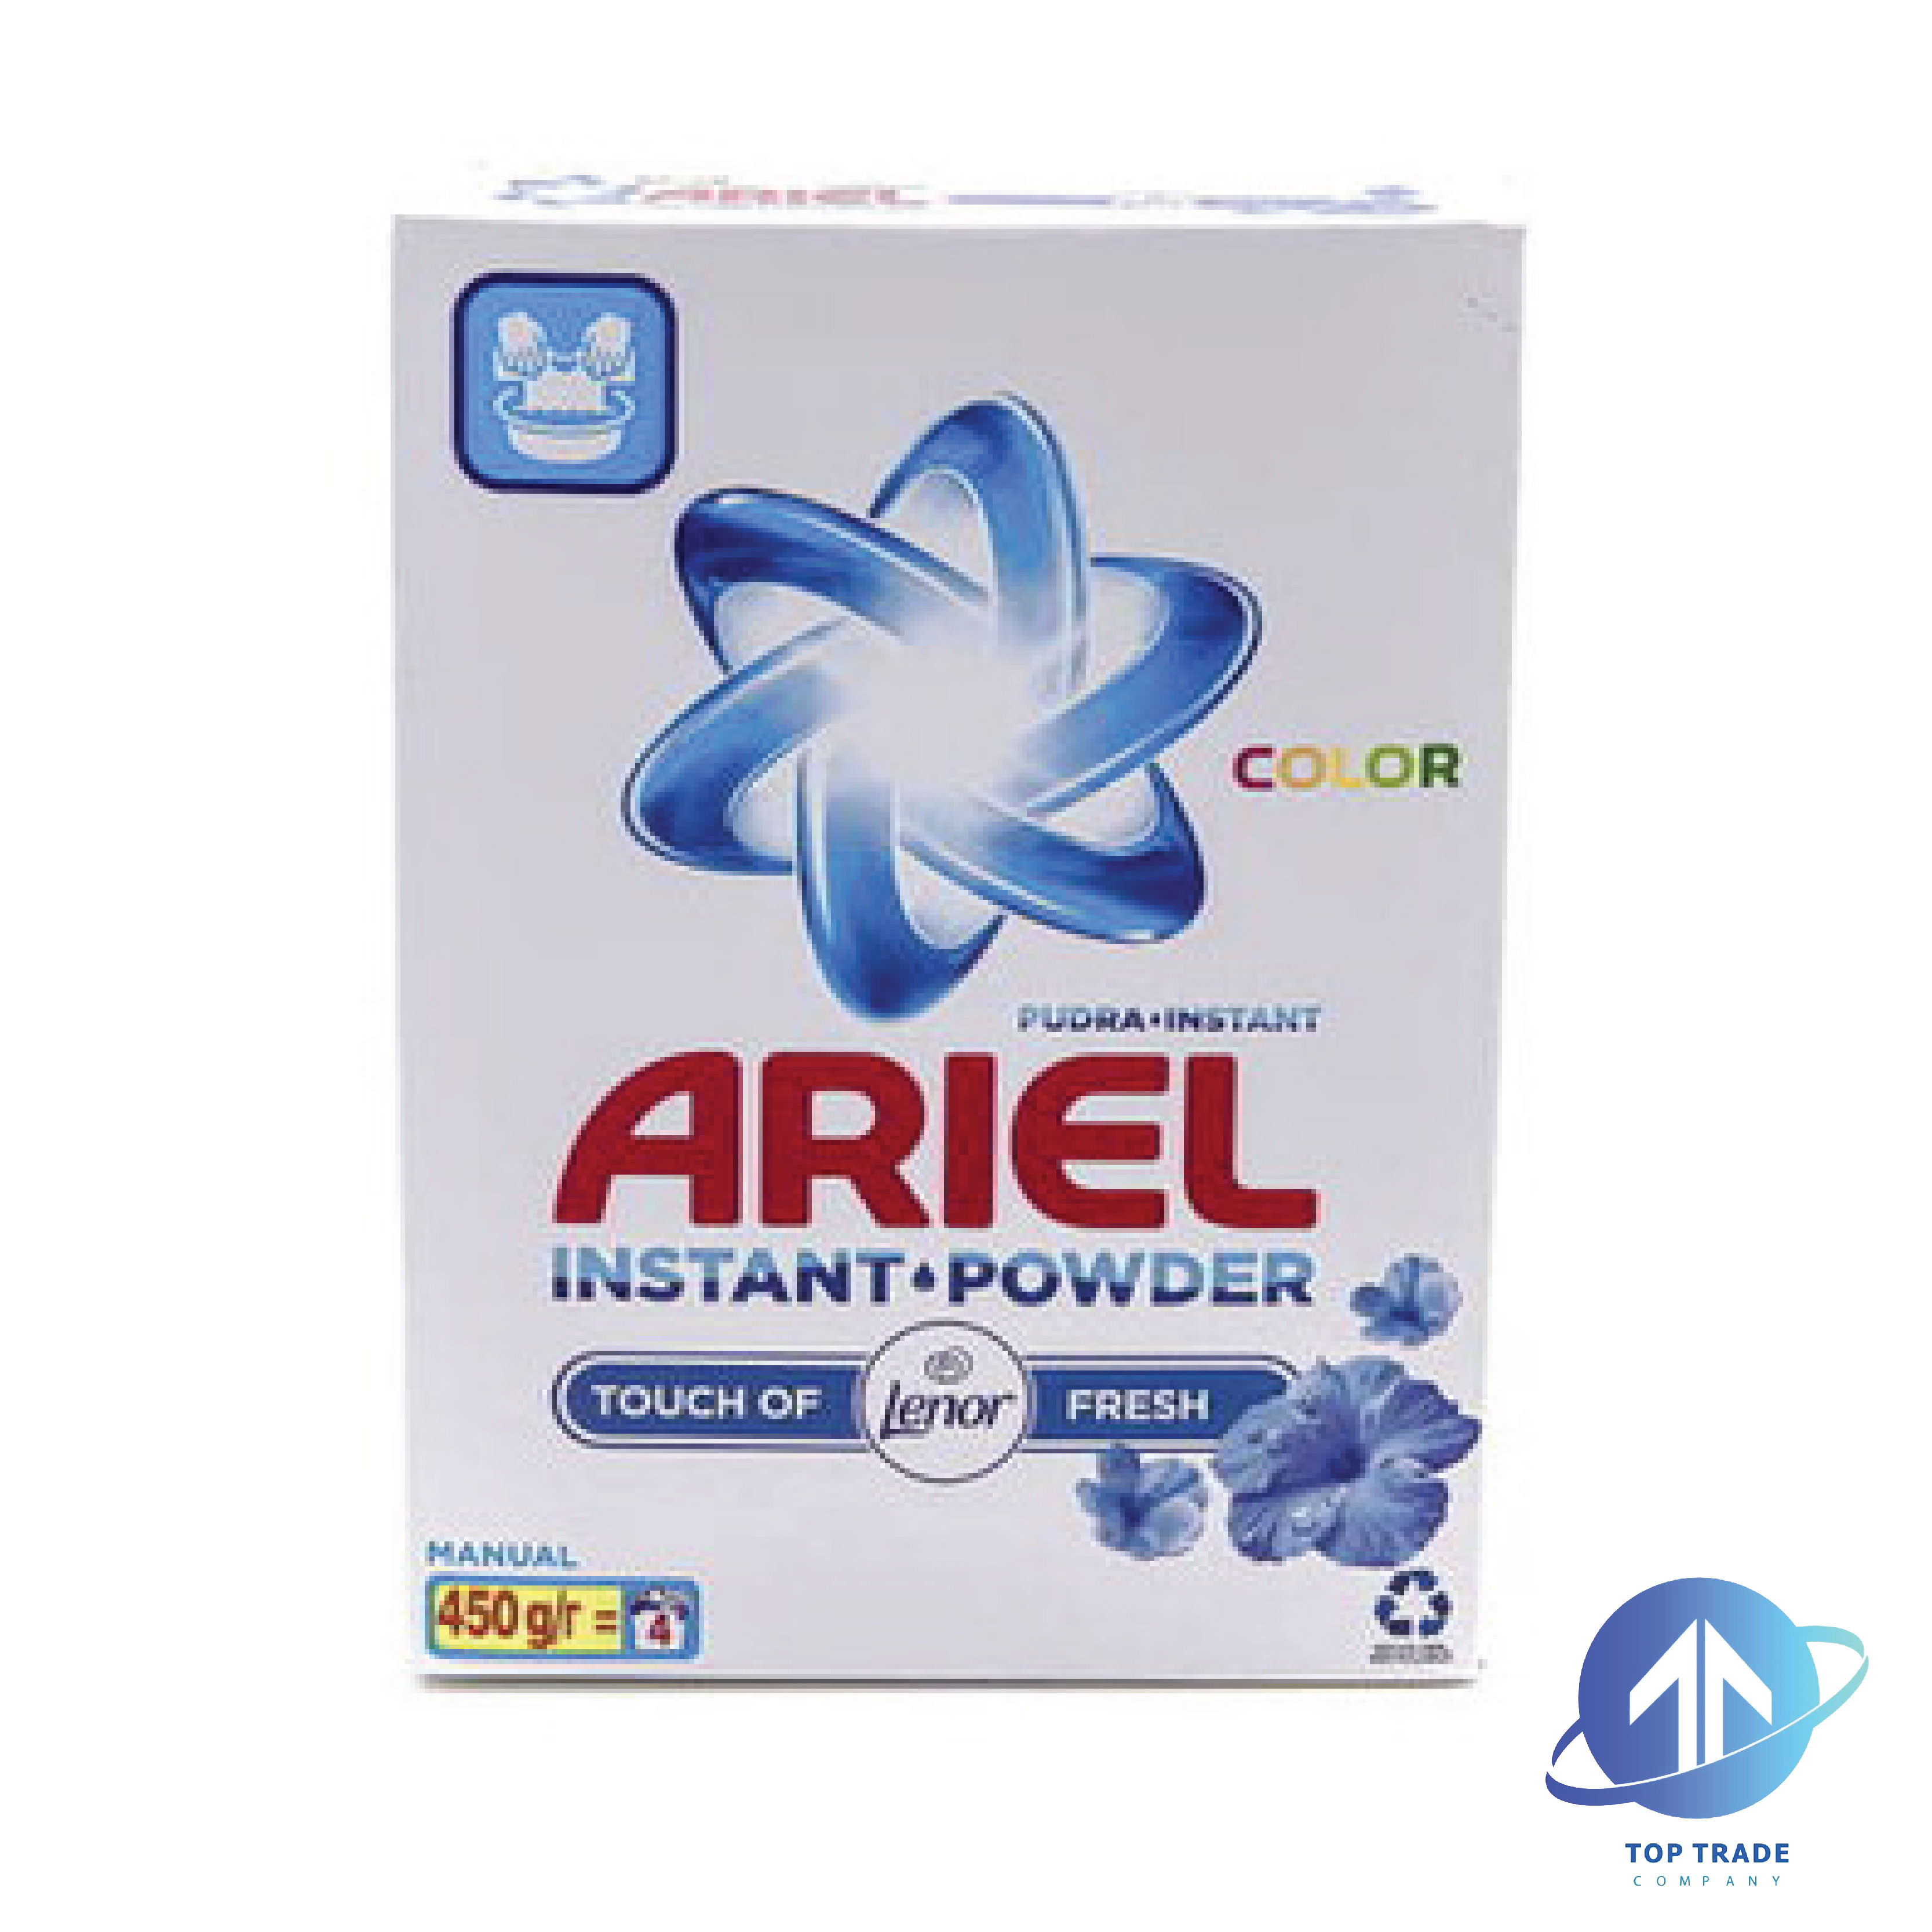 Ariel washing powder hand wash touch of lenor 450g/7sc